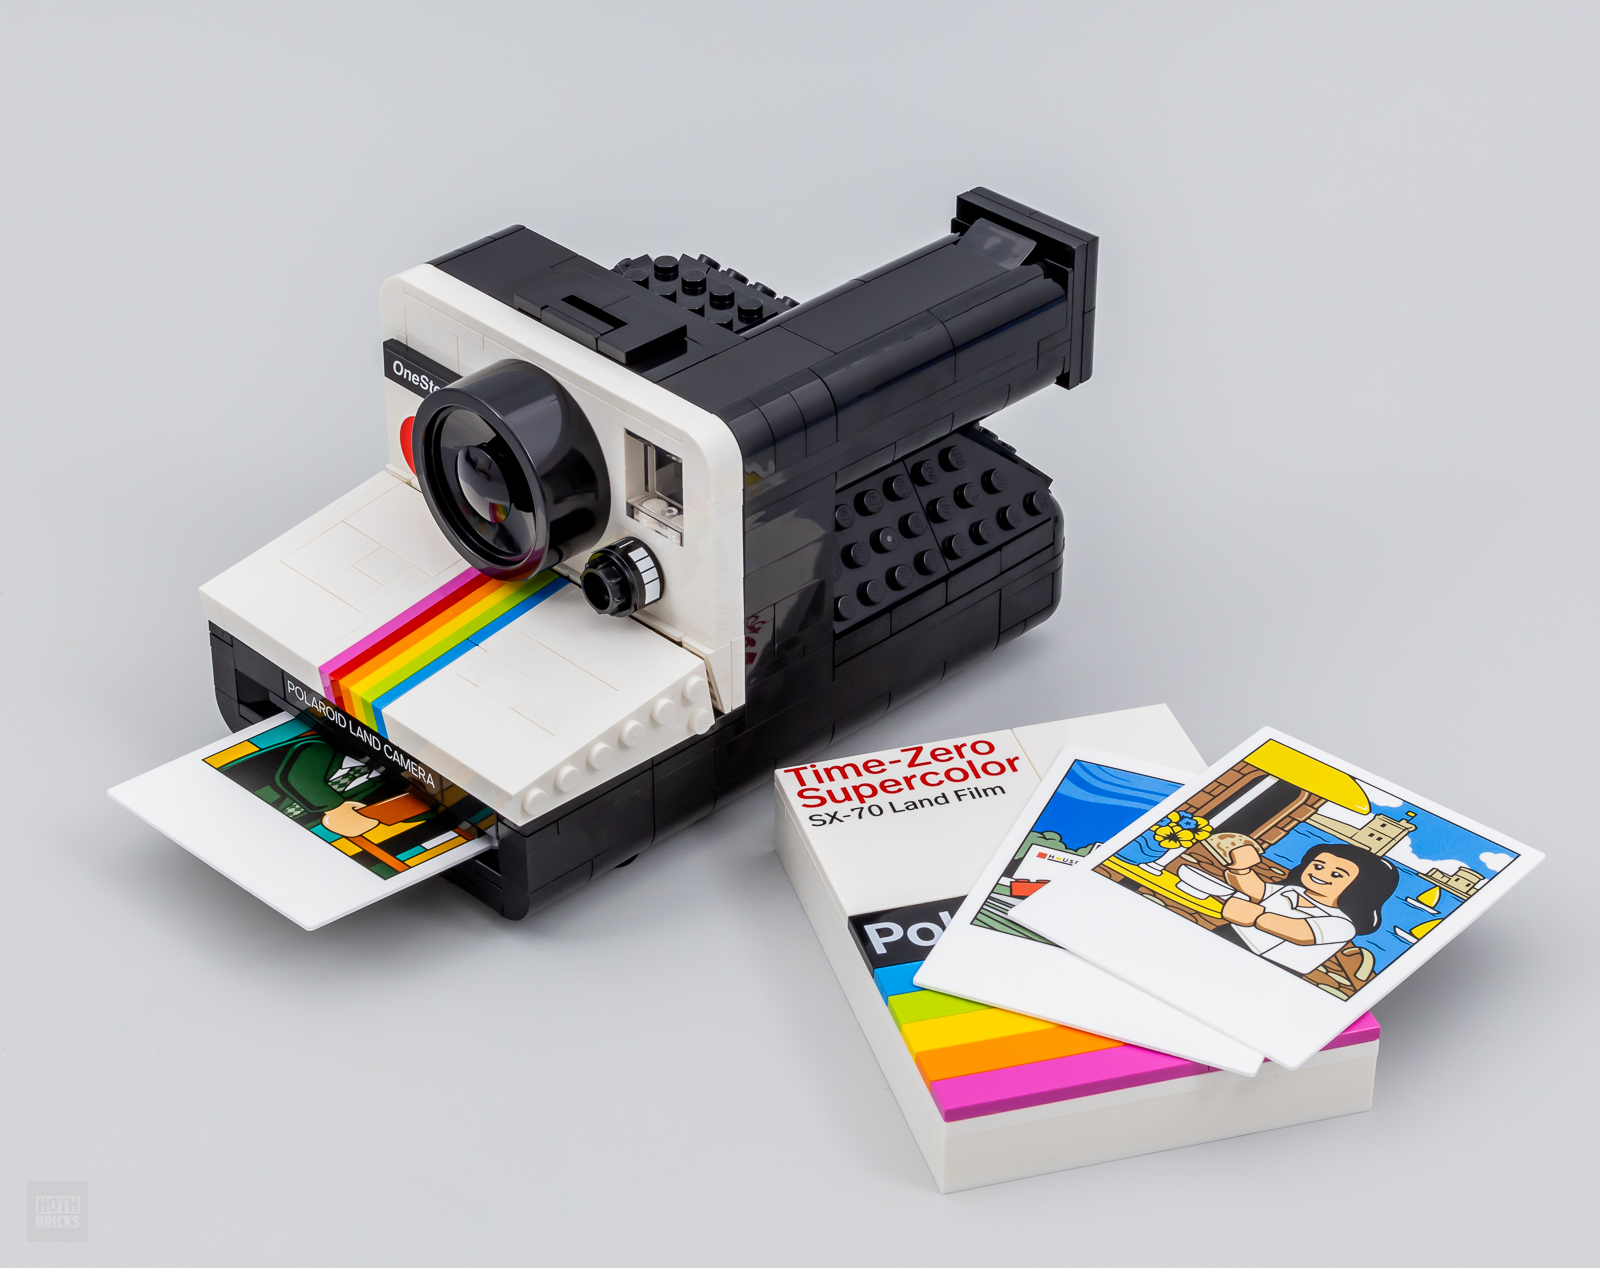 LEGO IDEAS - Polaroid OneStep SX-70